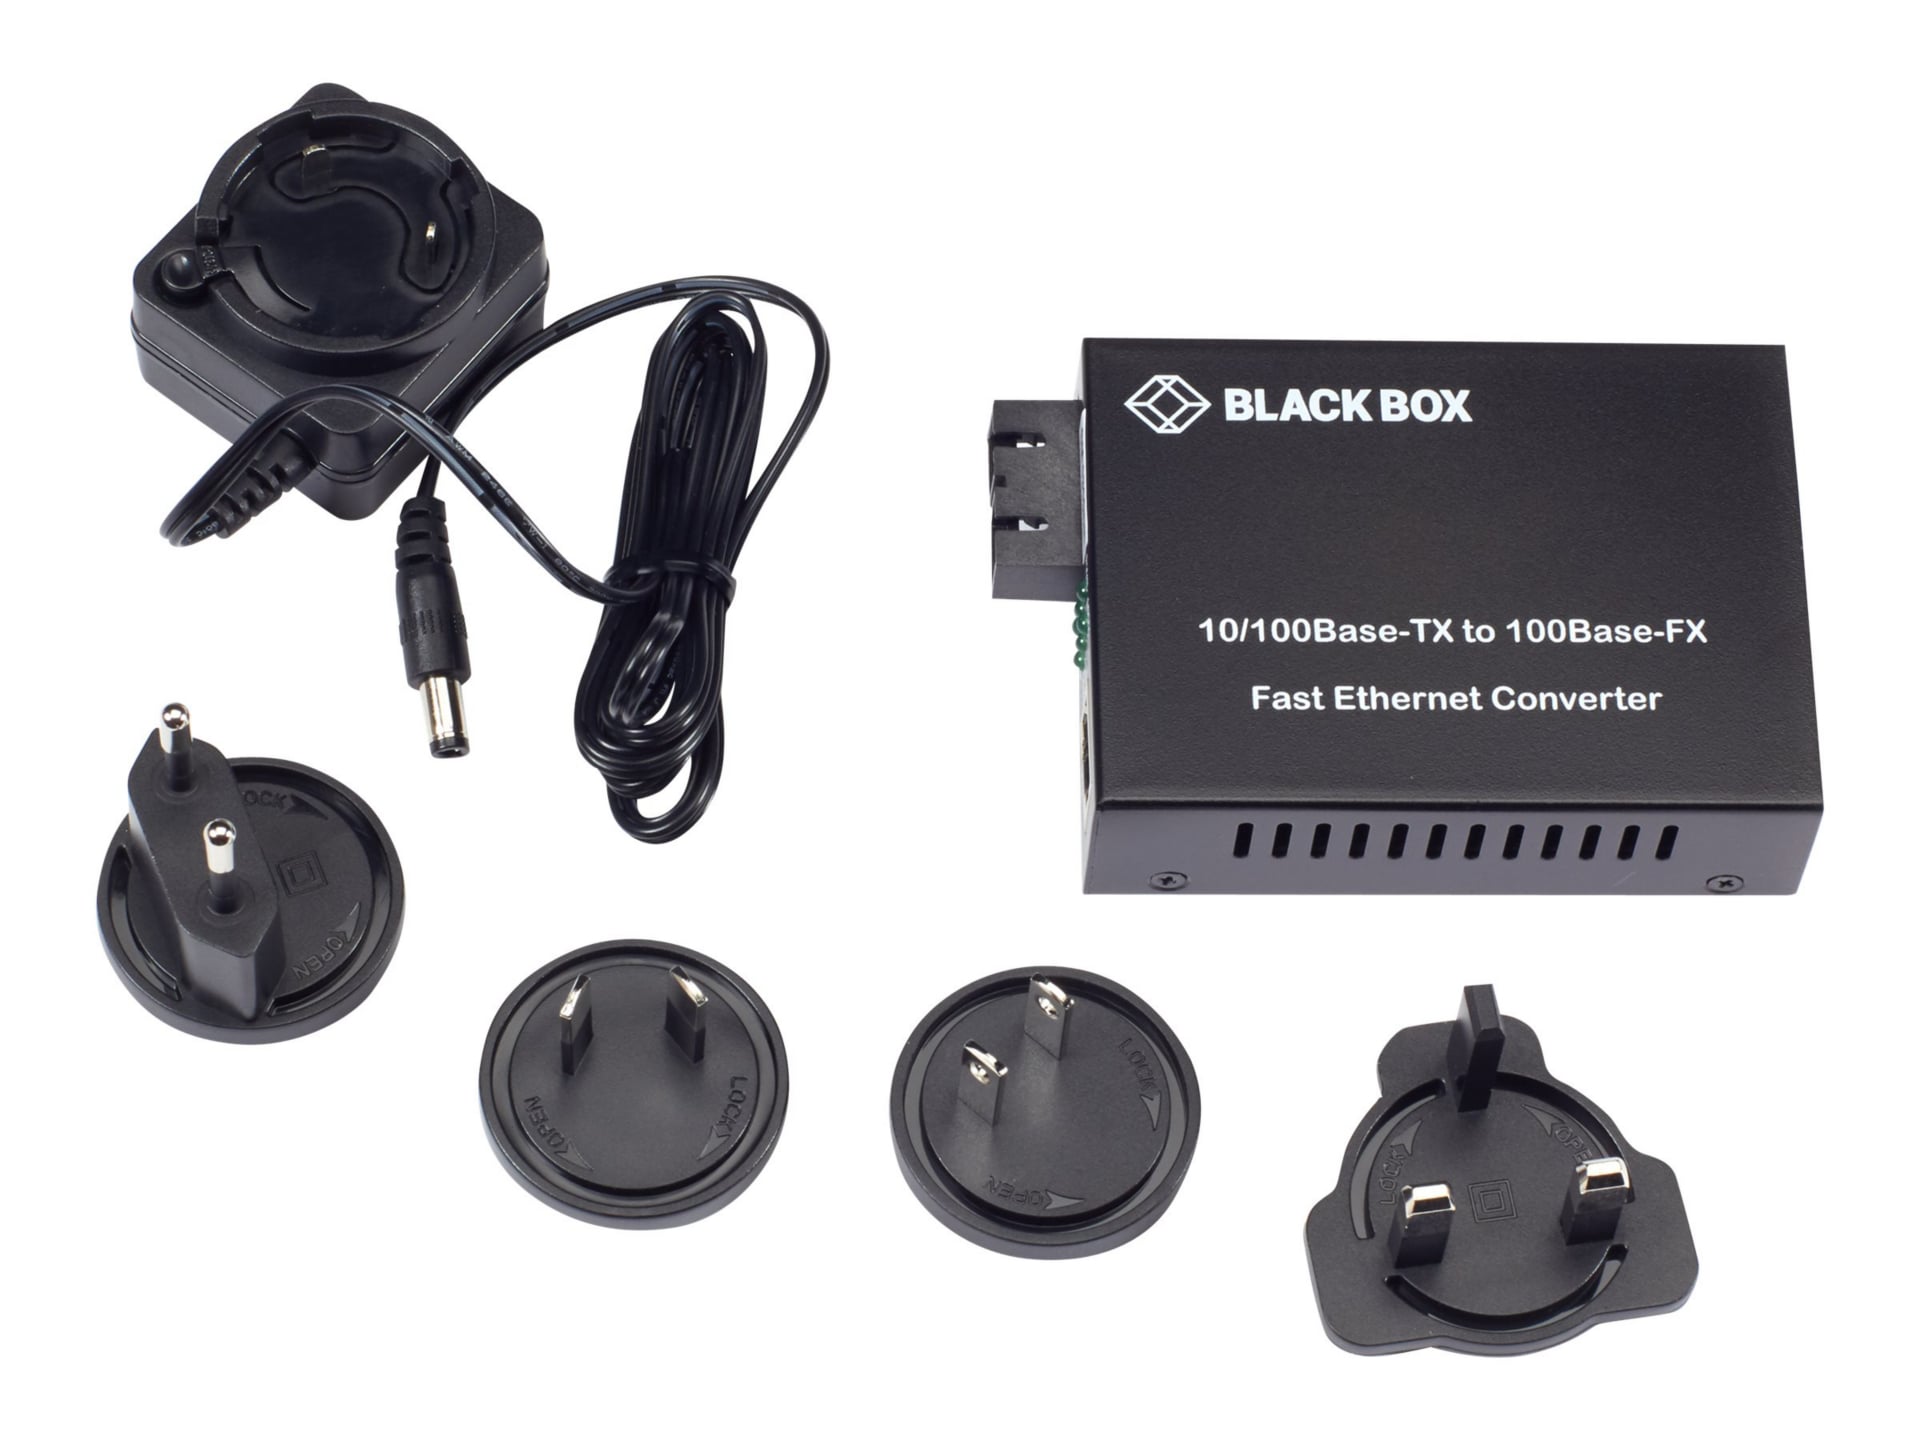 Black Box Fiber Media Converter Singlemode 1310nm SC, 100Base-FX to 10/100